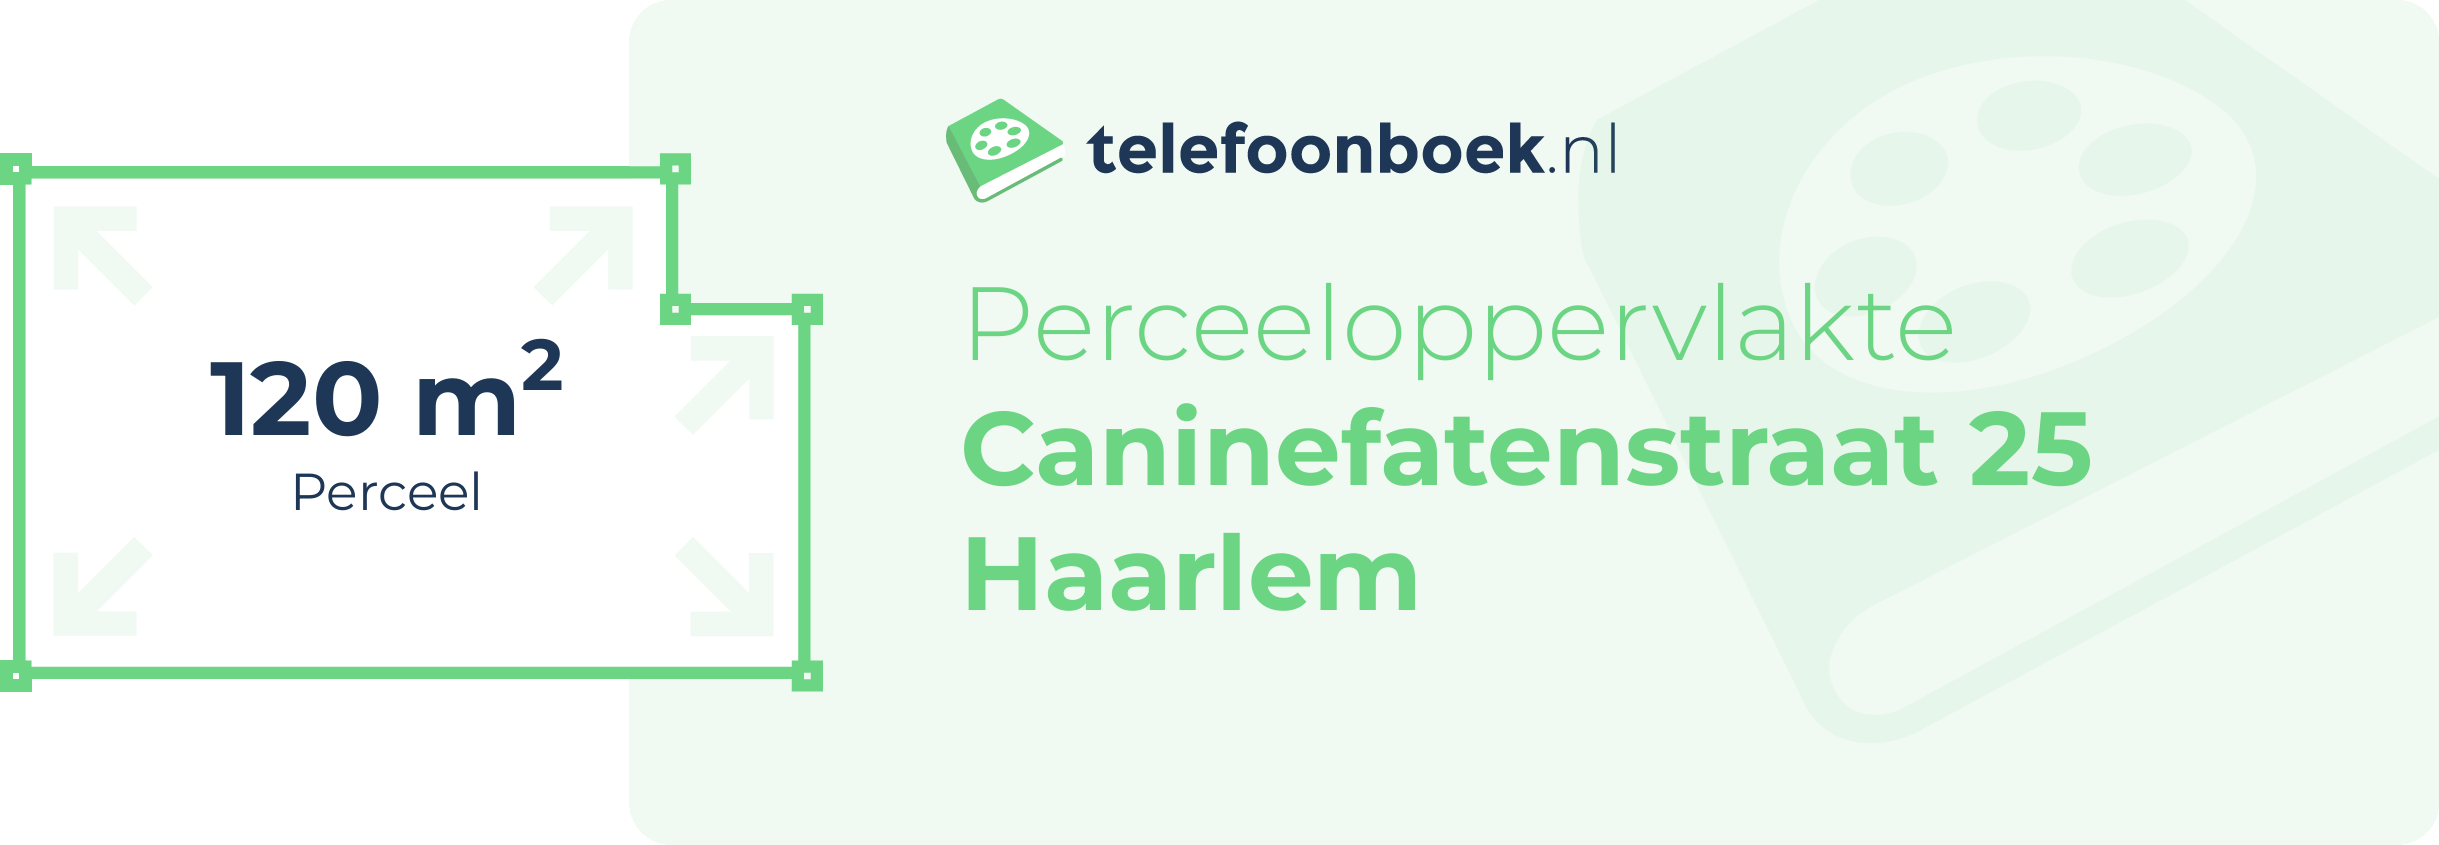 Perceeloppervlakte Caninefatenstraat 25 Haarlem